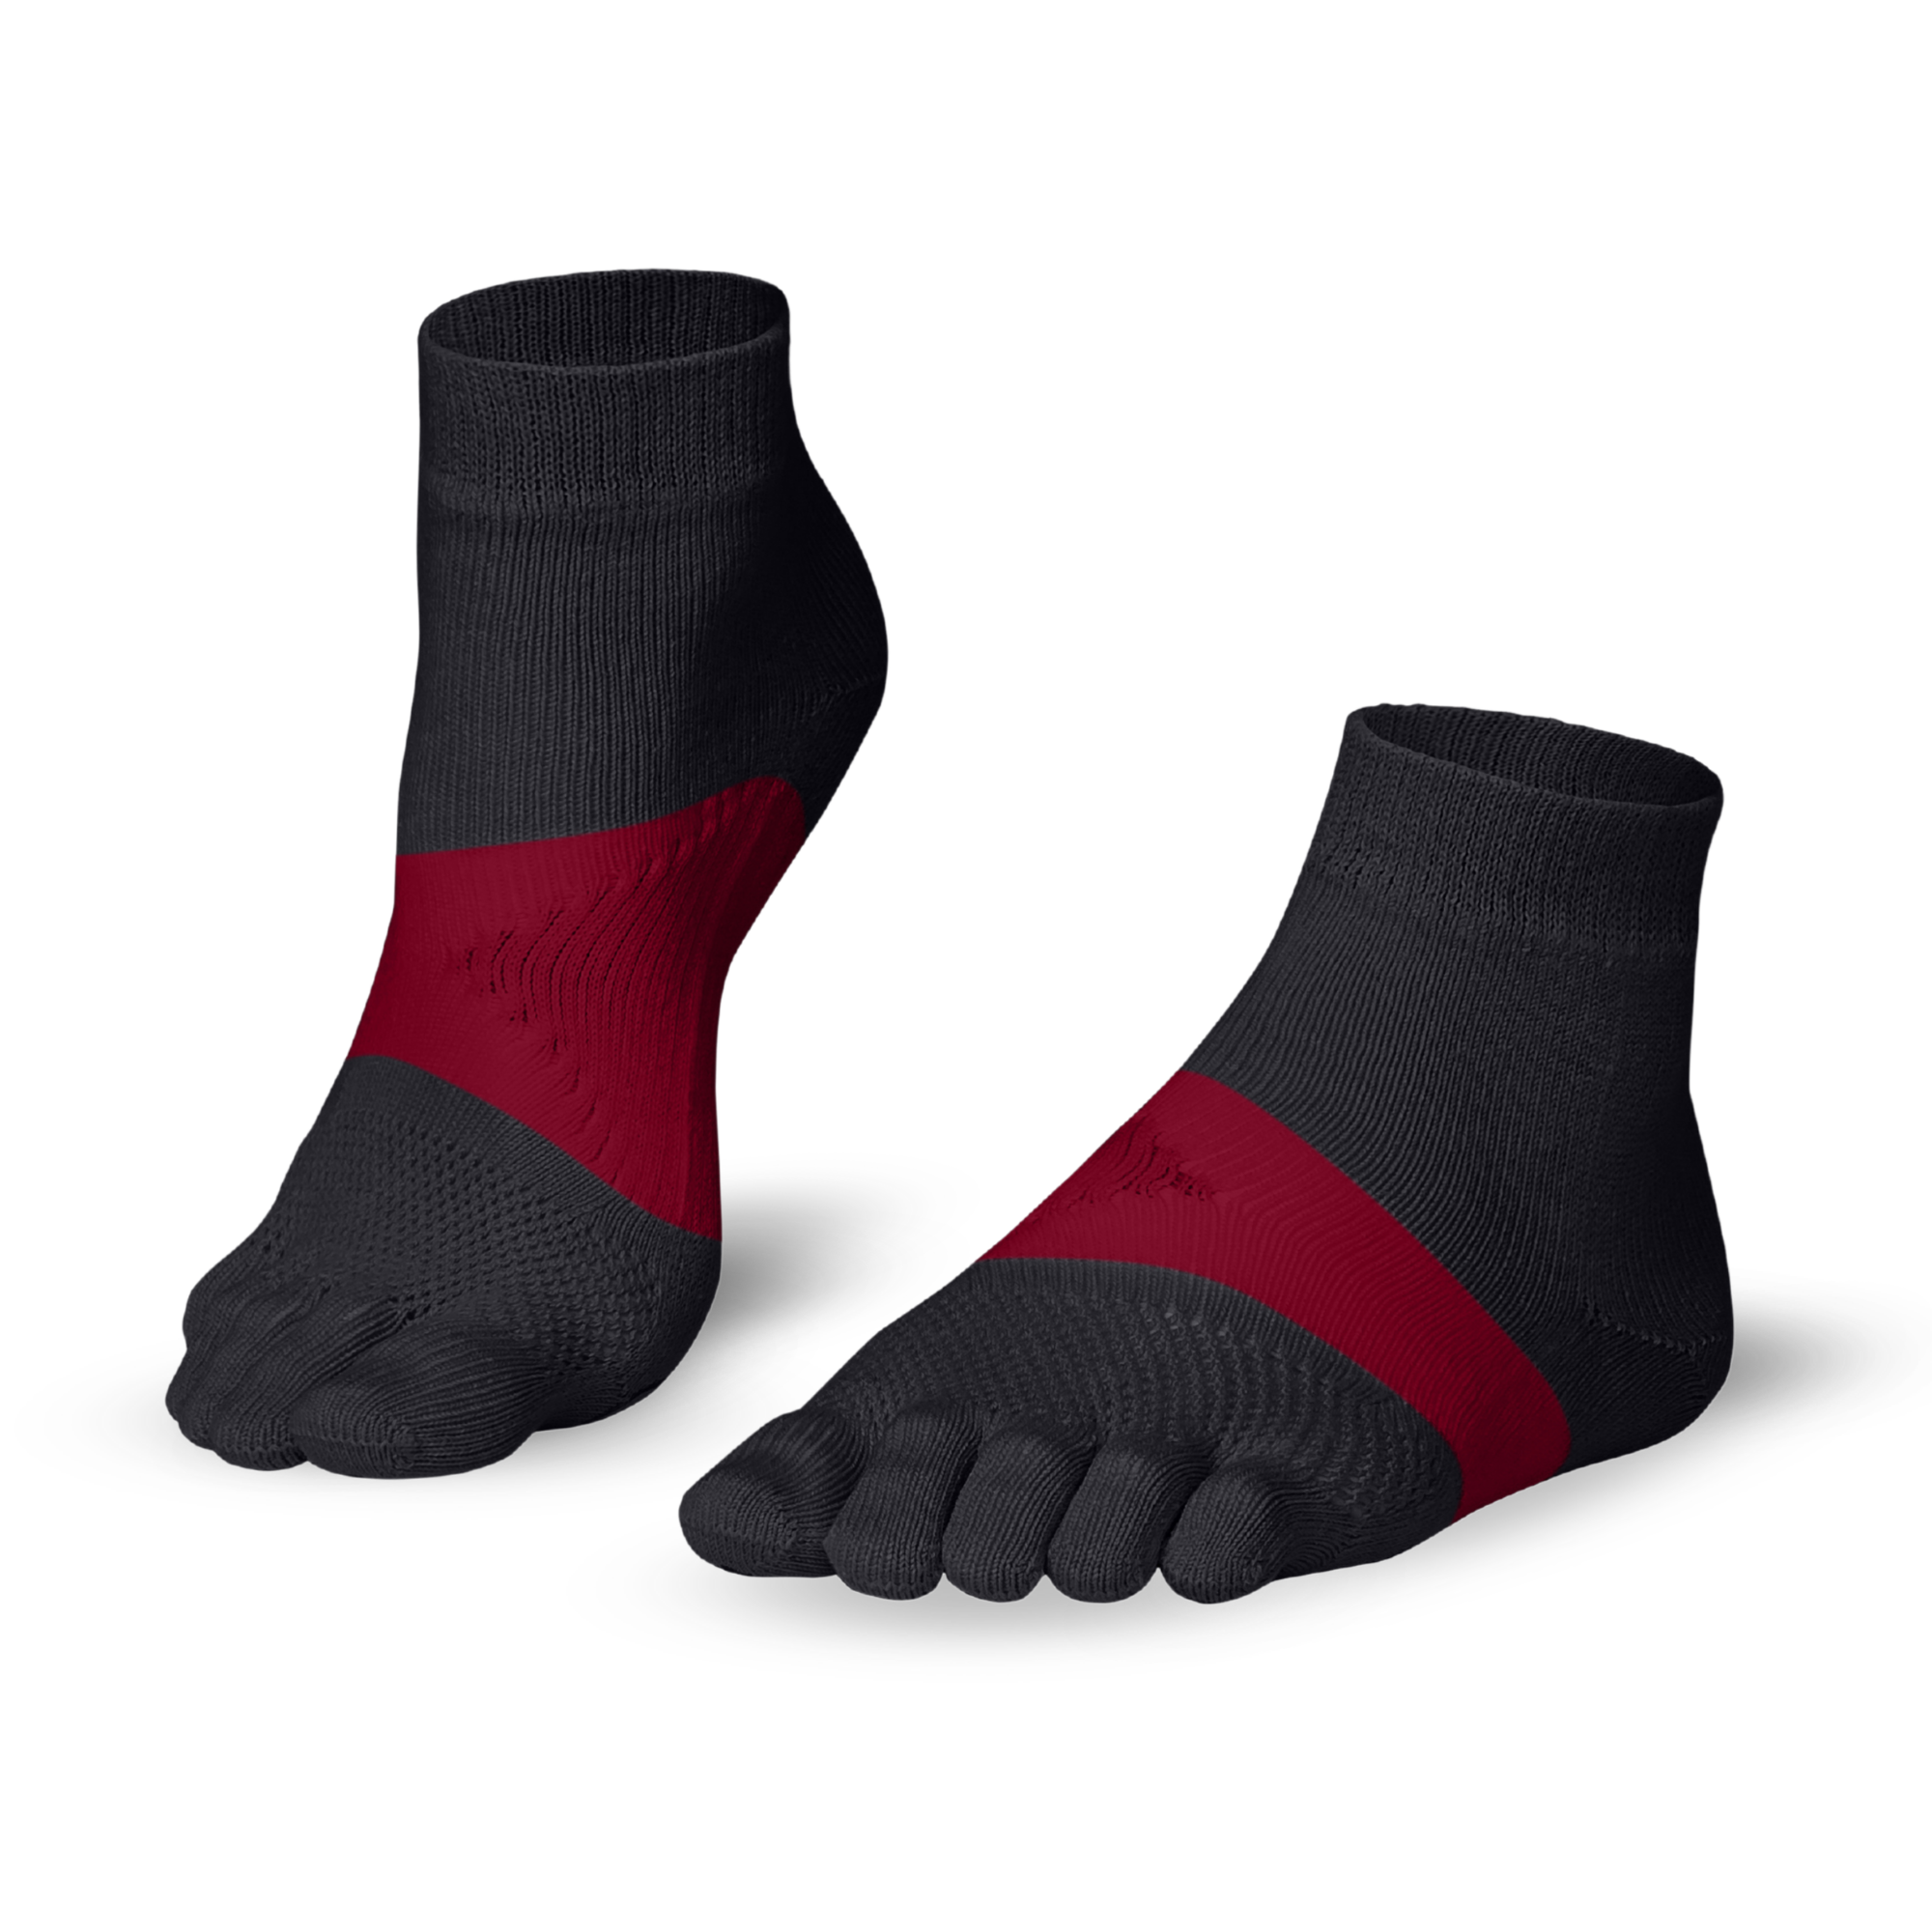 Calcetines de running TS - los calcetines de running imprescindibles de Knitido : gris / rojo carmín